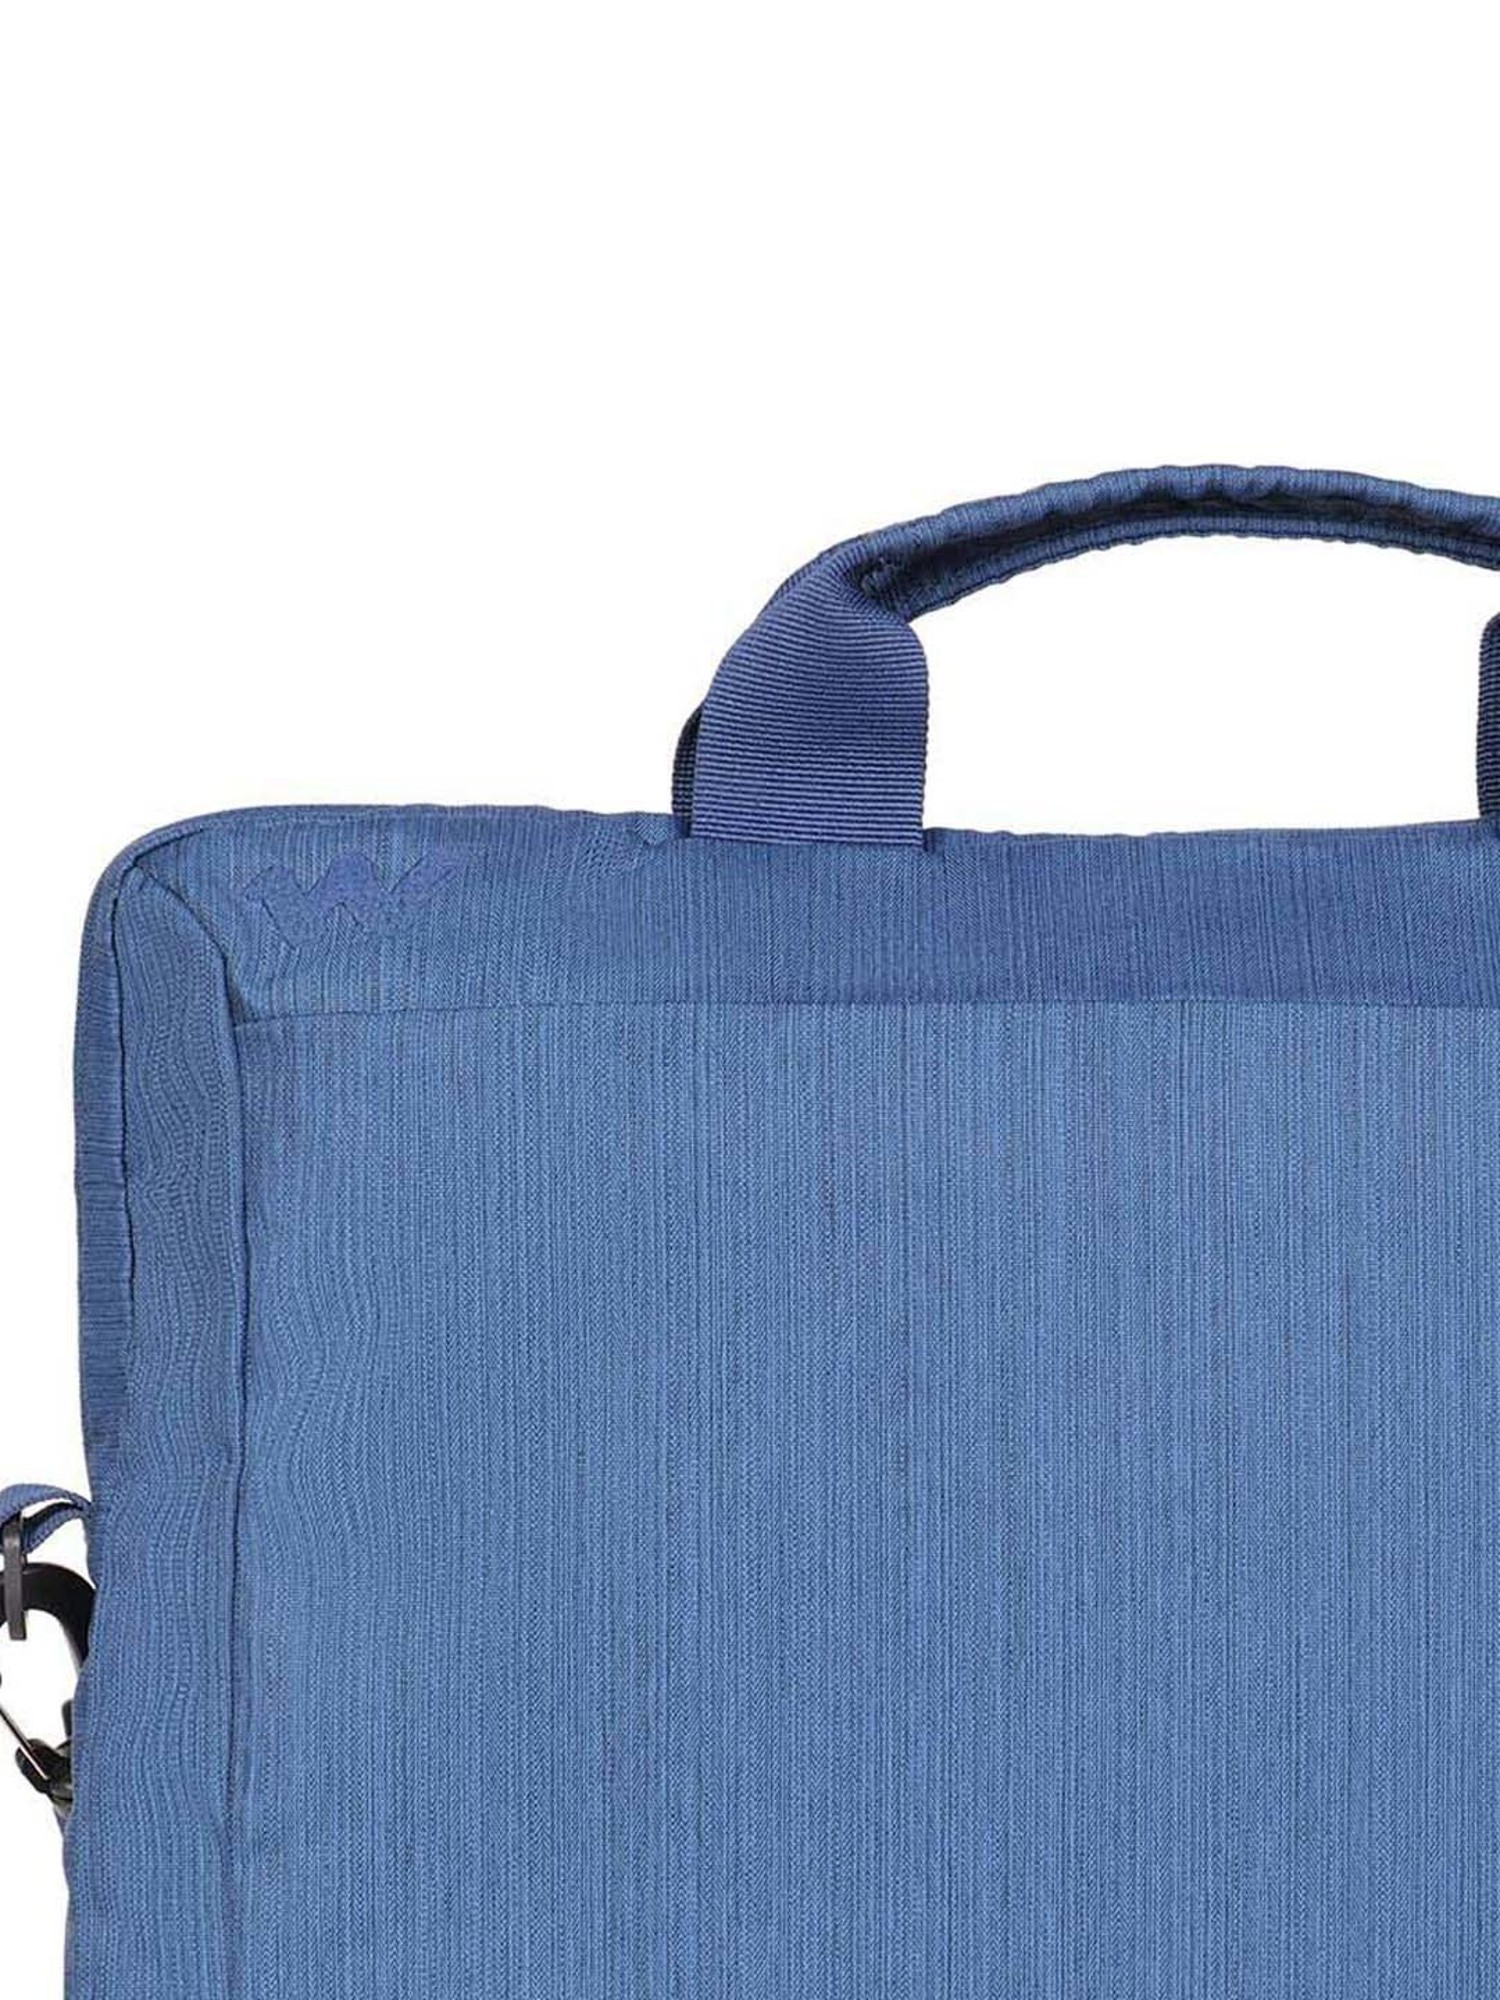 Buy Wildcraft Icon Blue Solid Medium Laptop Messenger Bag Online At Best  Price @ Tata CLiQ